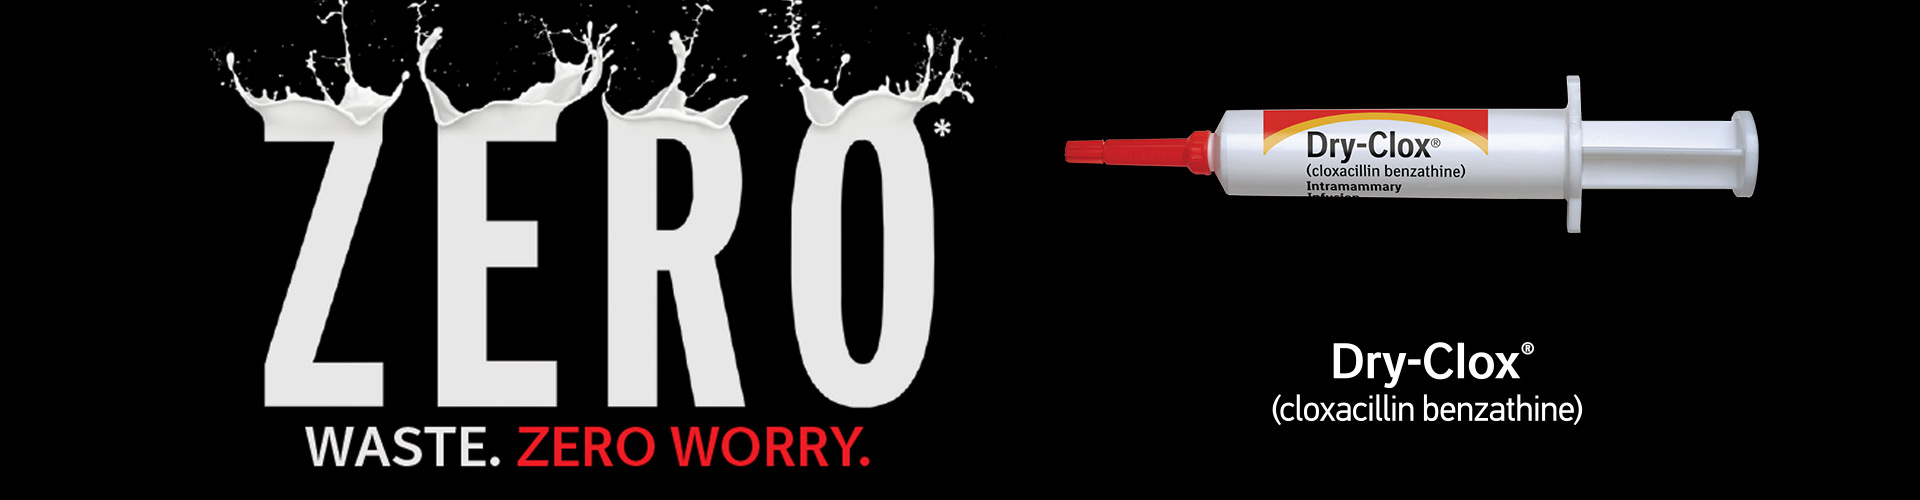 Dry-Clox - Zero Waste, Zero Worry